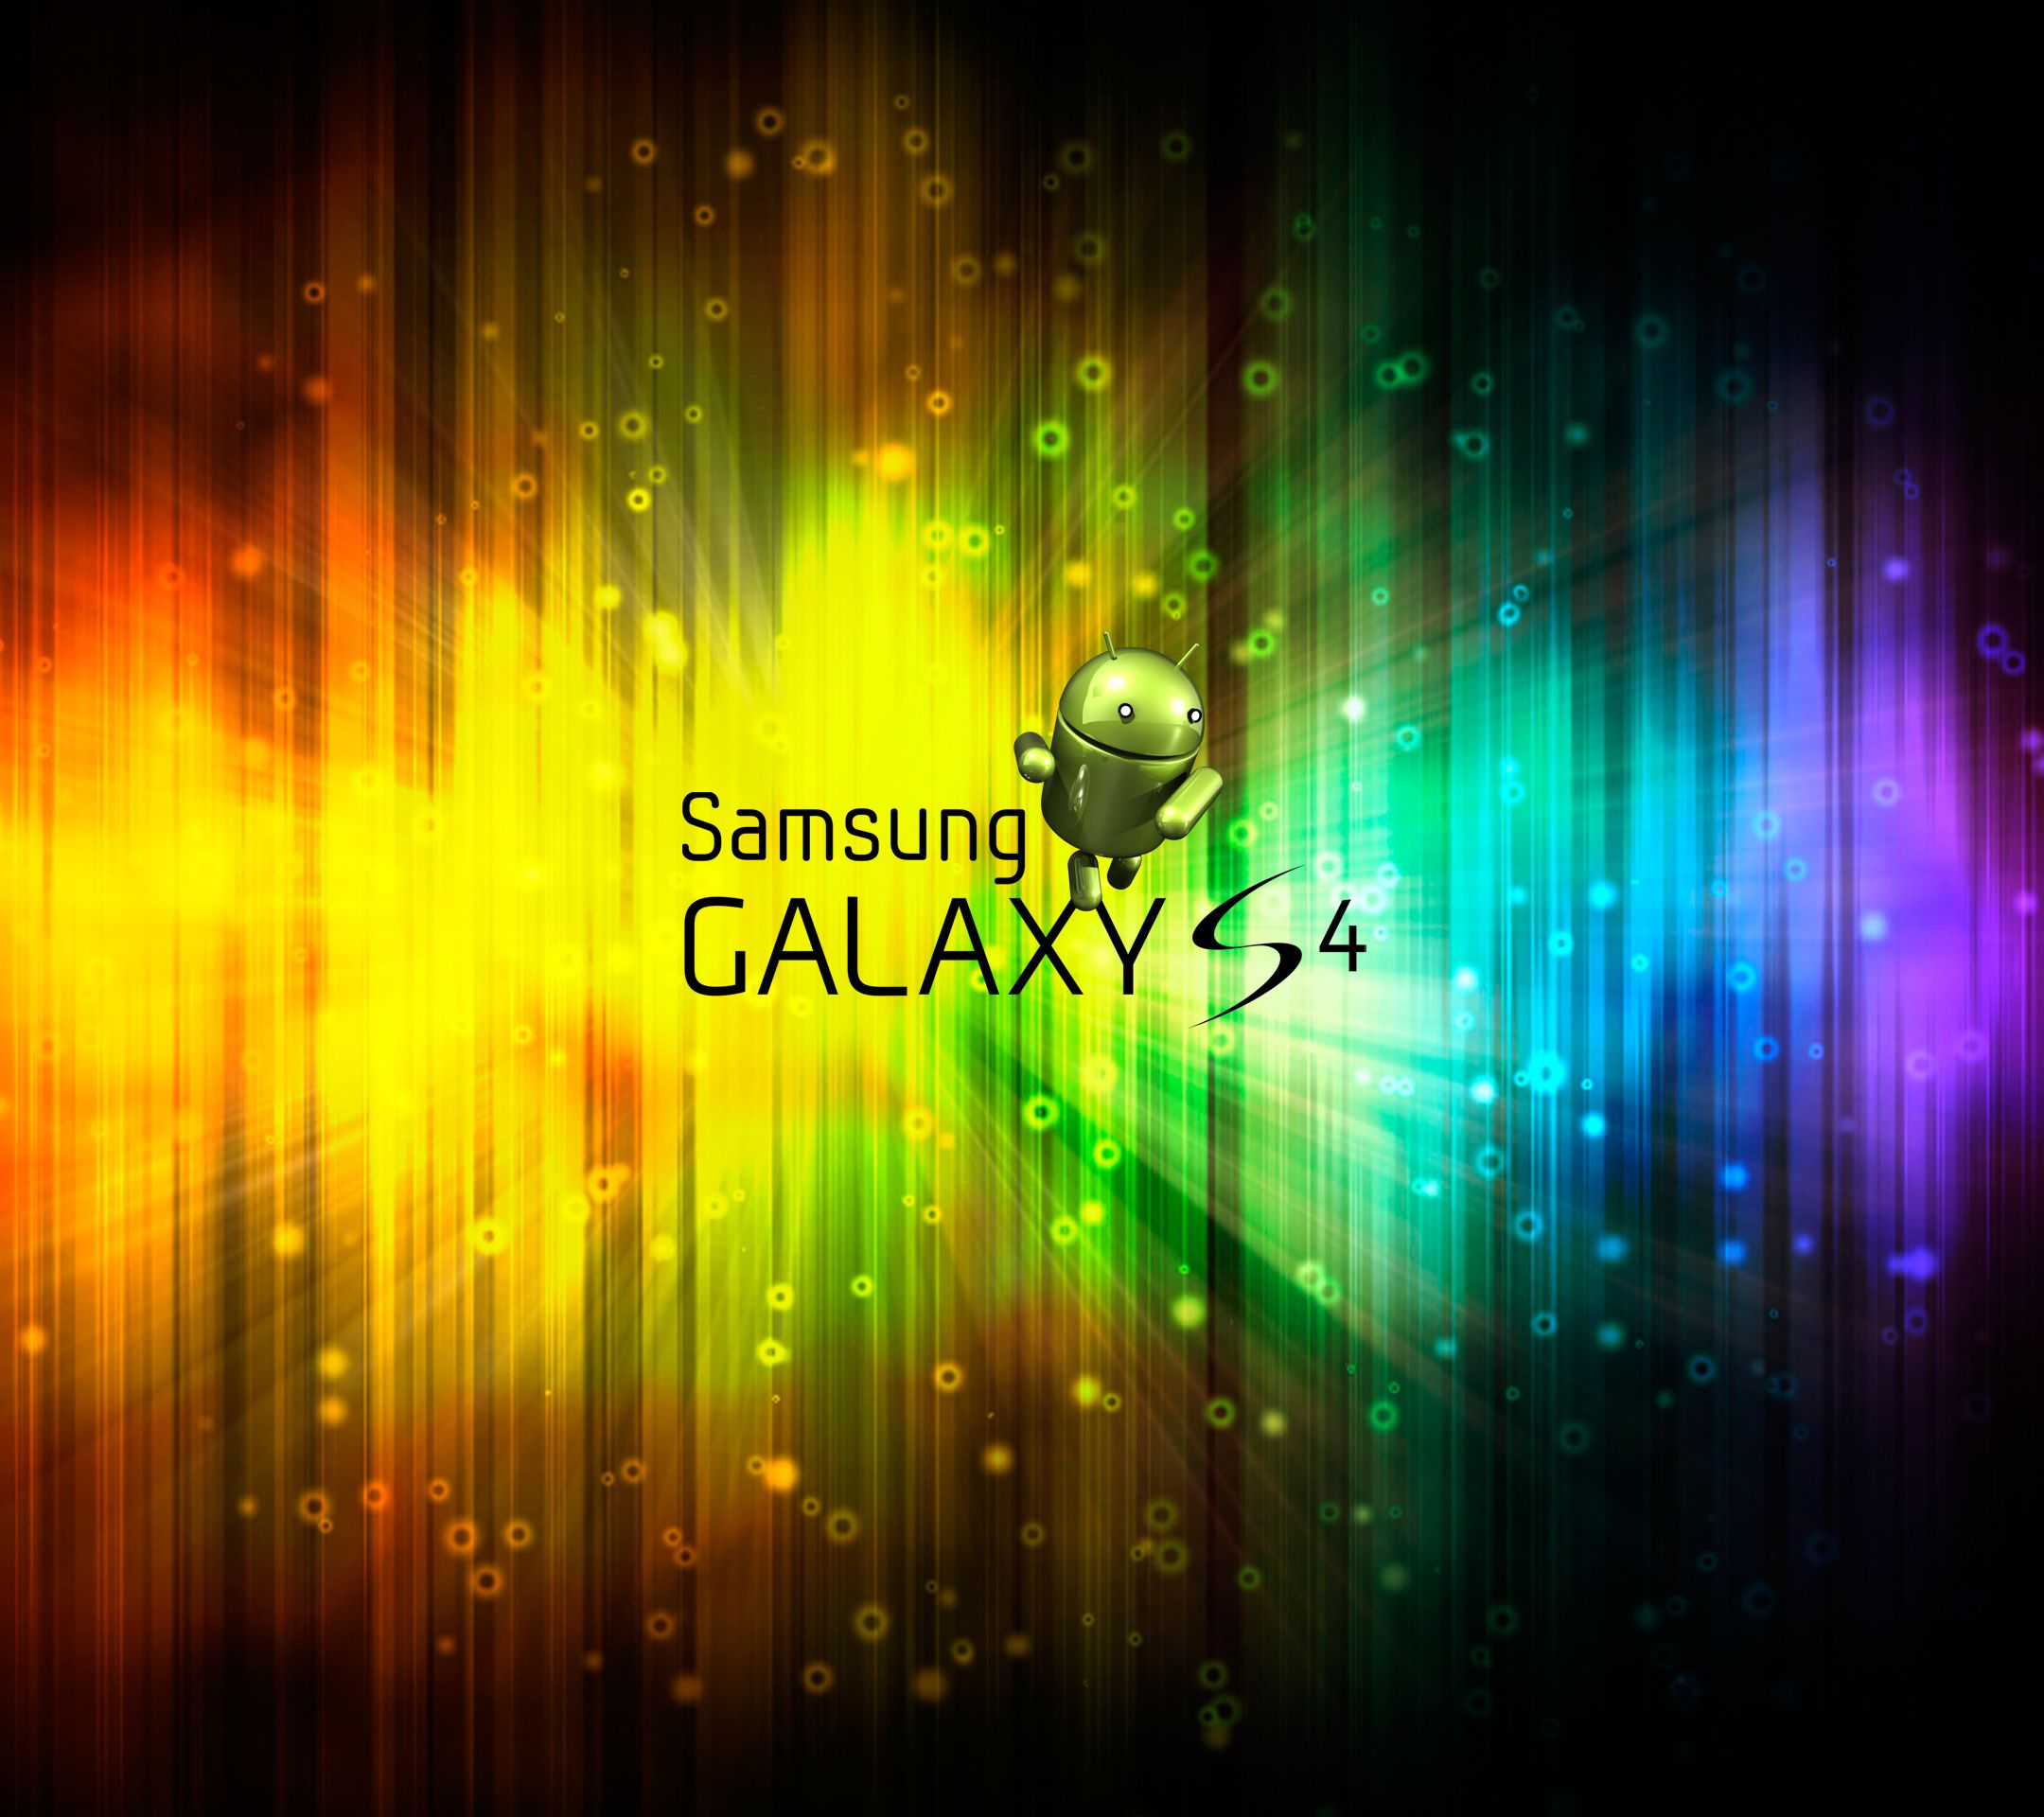 Galaxy S4 Wallpapers HD - Beautiful, stunning wallpapers